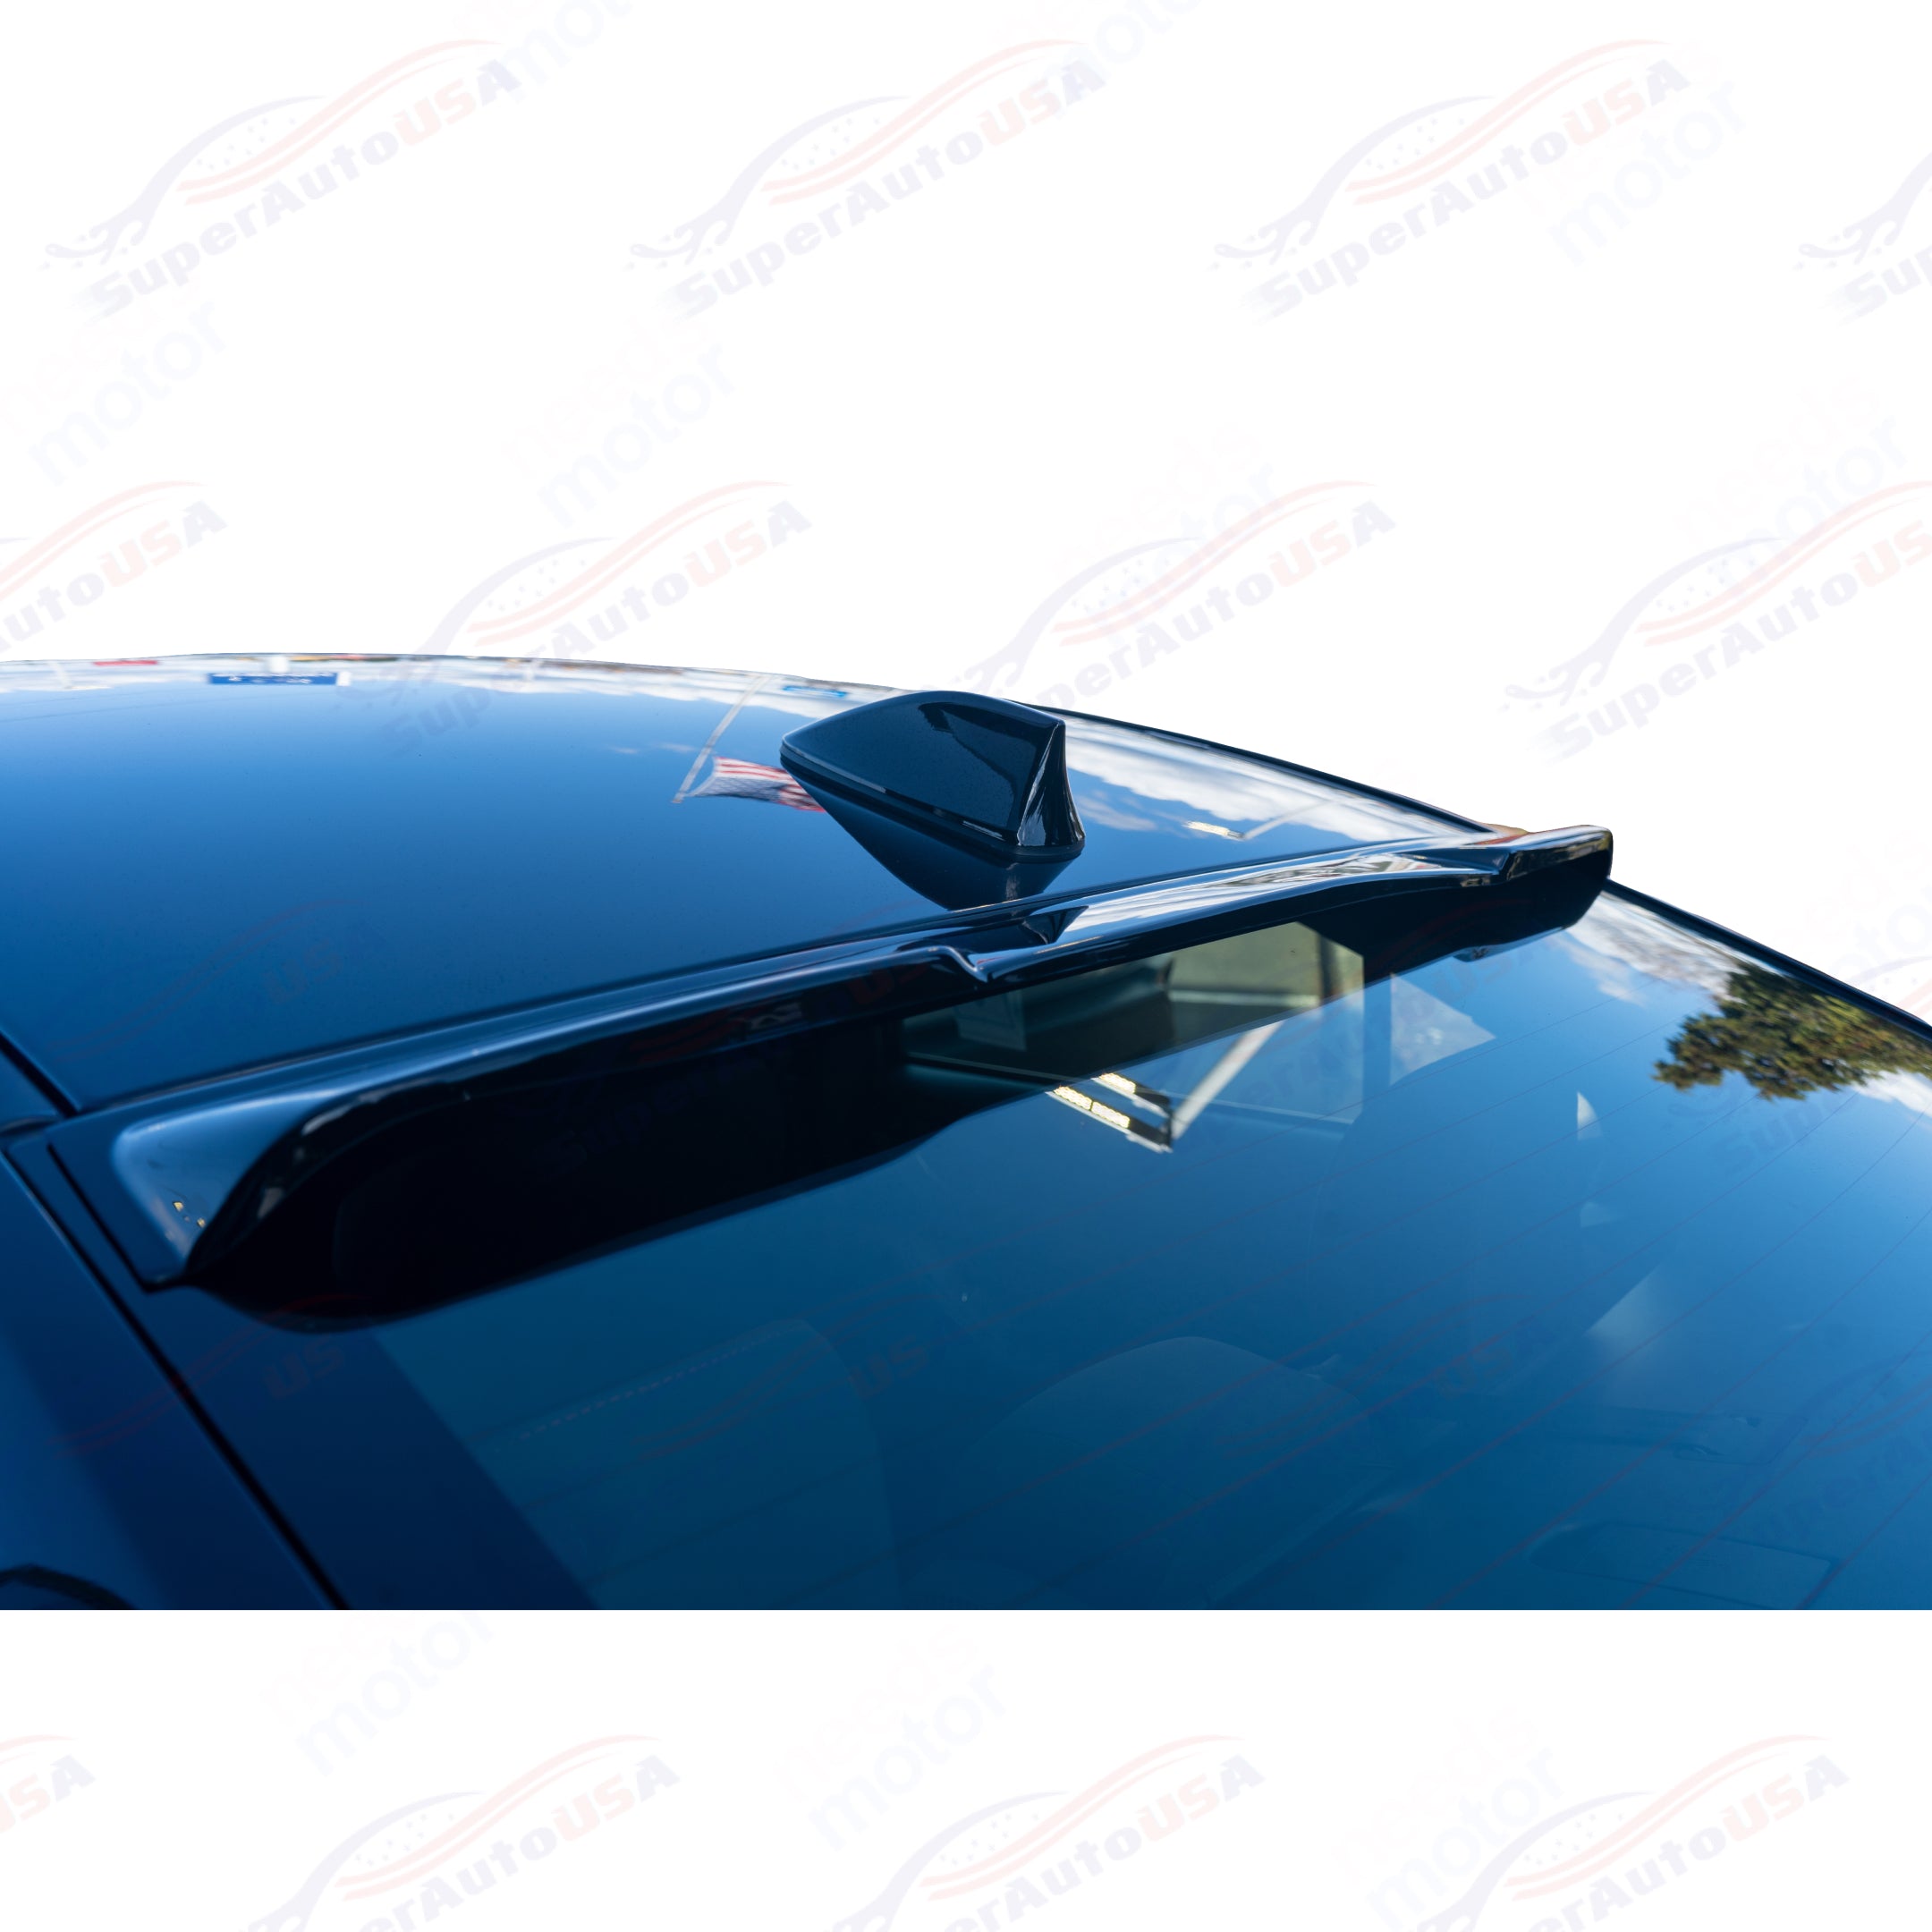 Fits 2004-2009 Mazda3 Sedan Gloss Black Rear Roof Window Visor Spoiler Wing